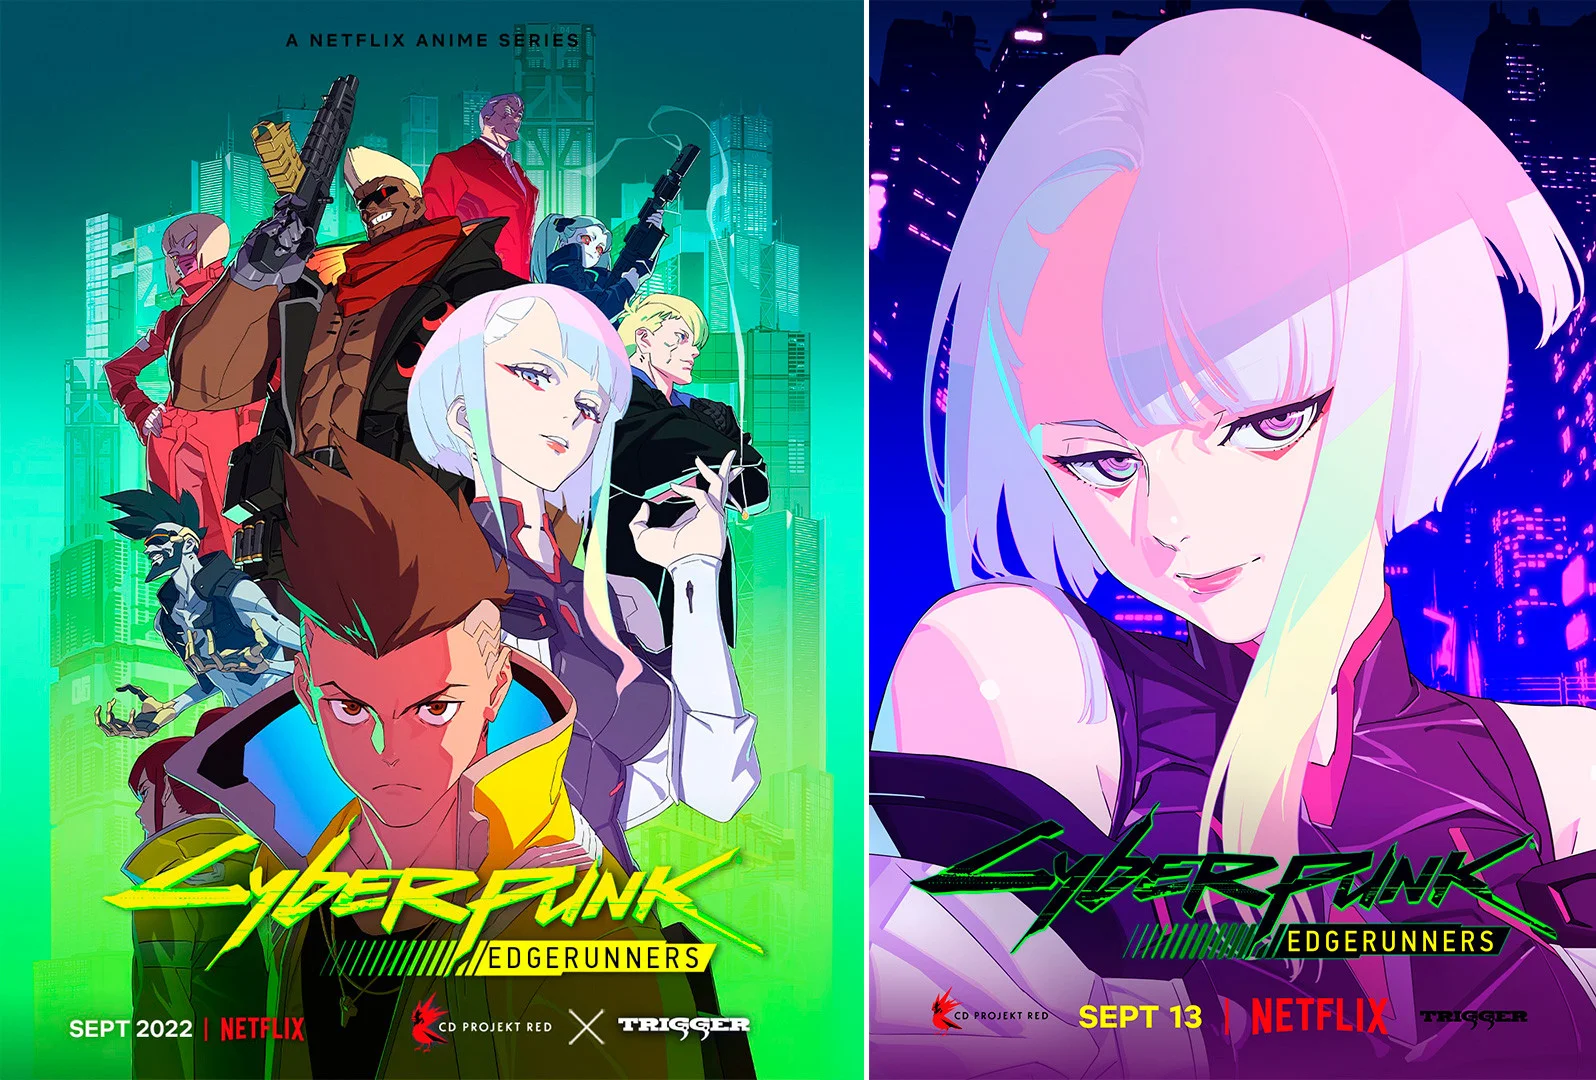 Мультсериал Cyberpunk: Edgerunners выходит на Netflix 13 сентября - фото 1